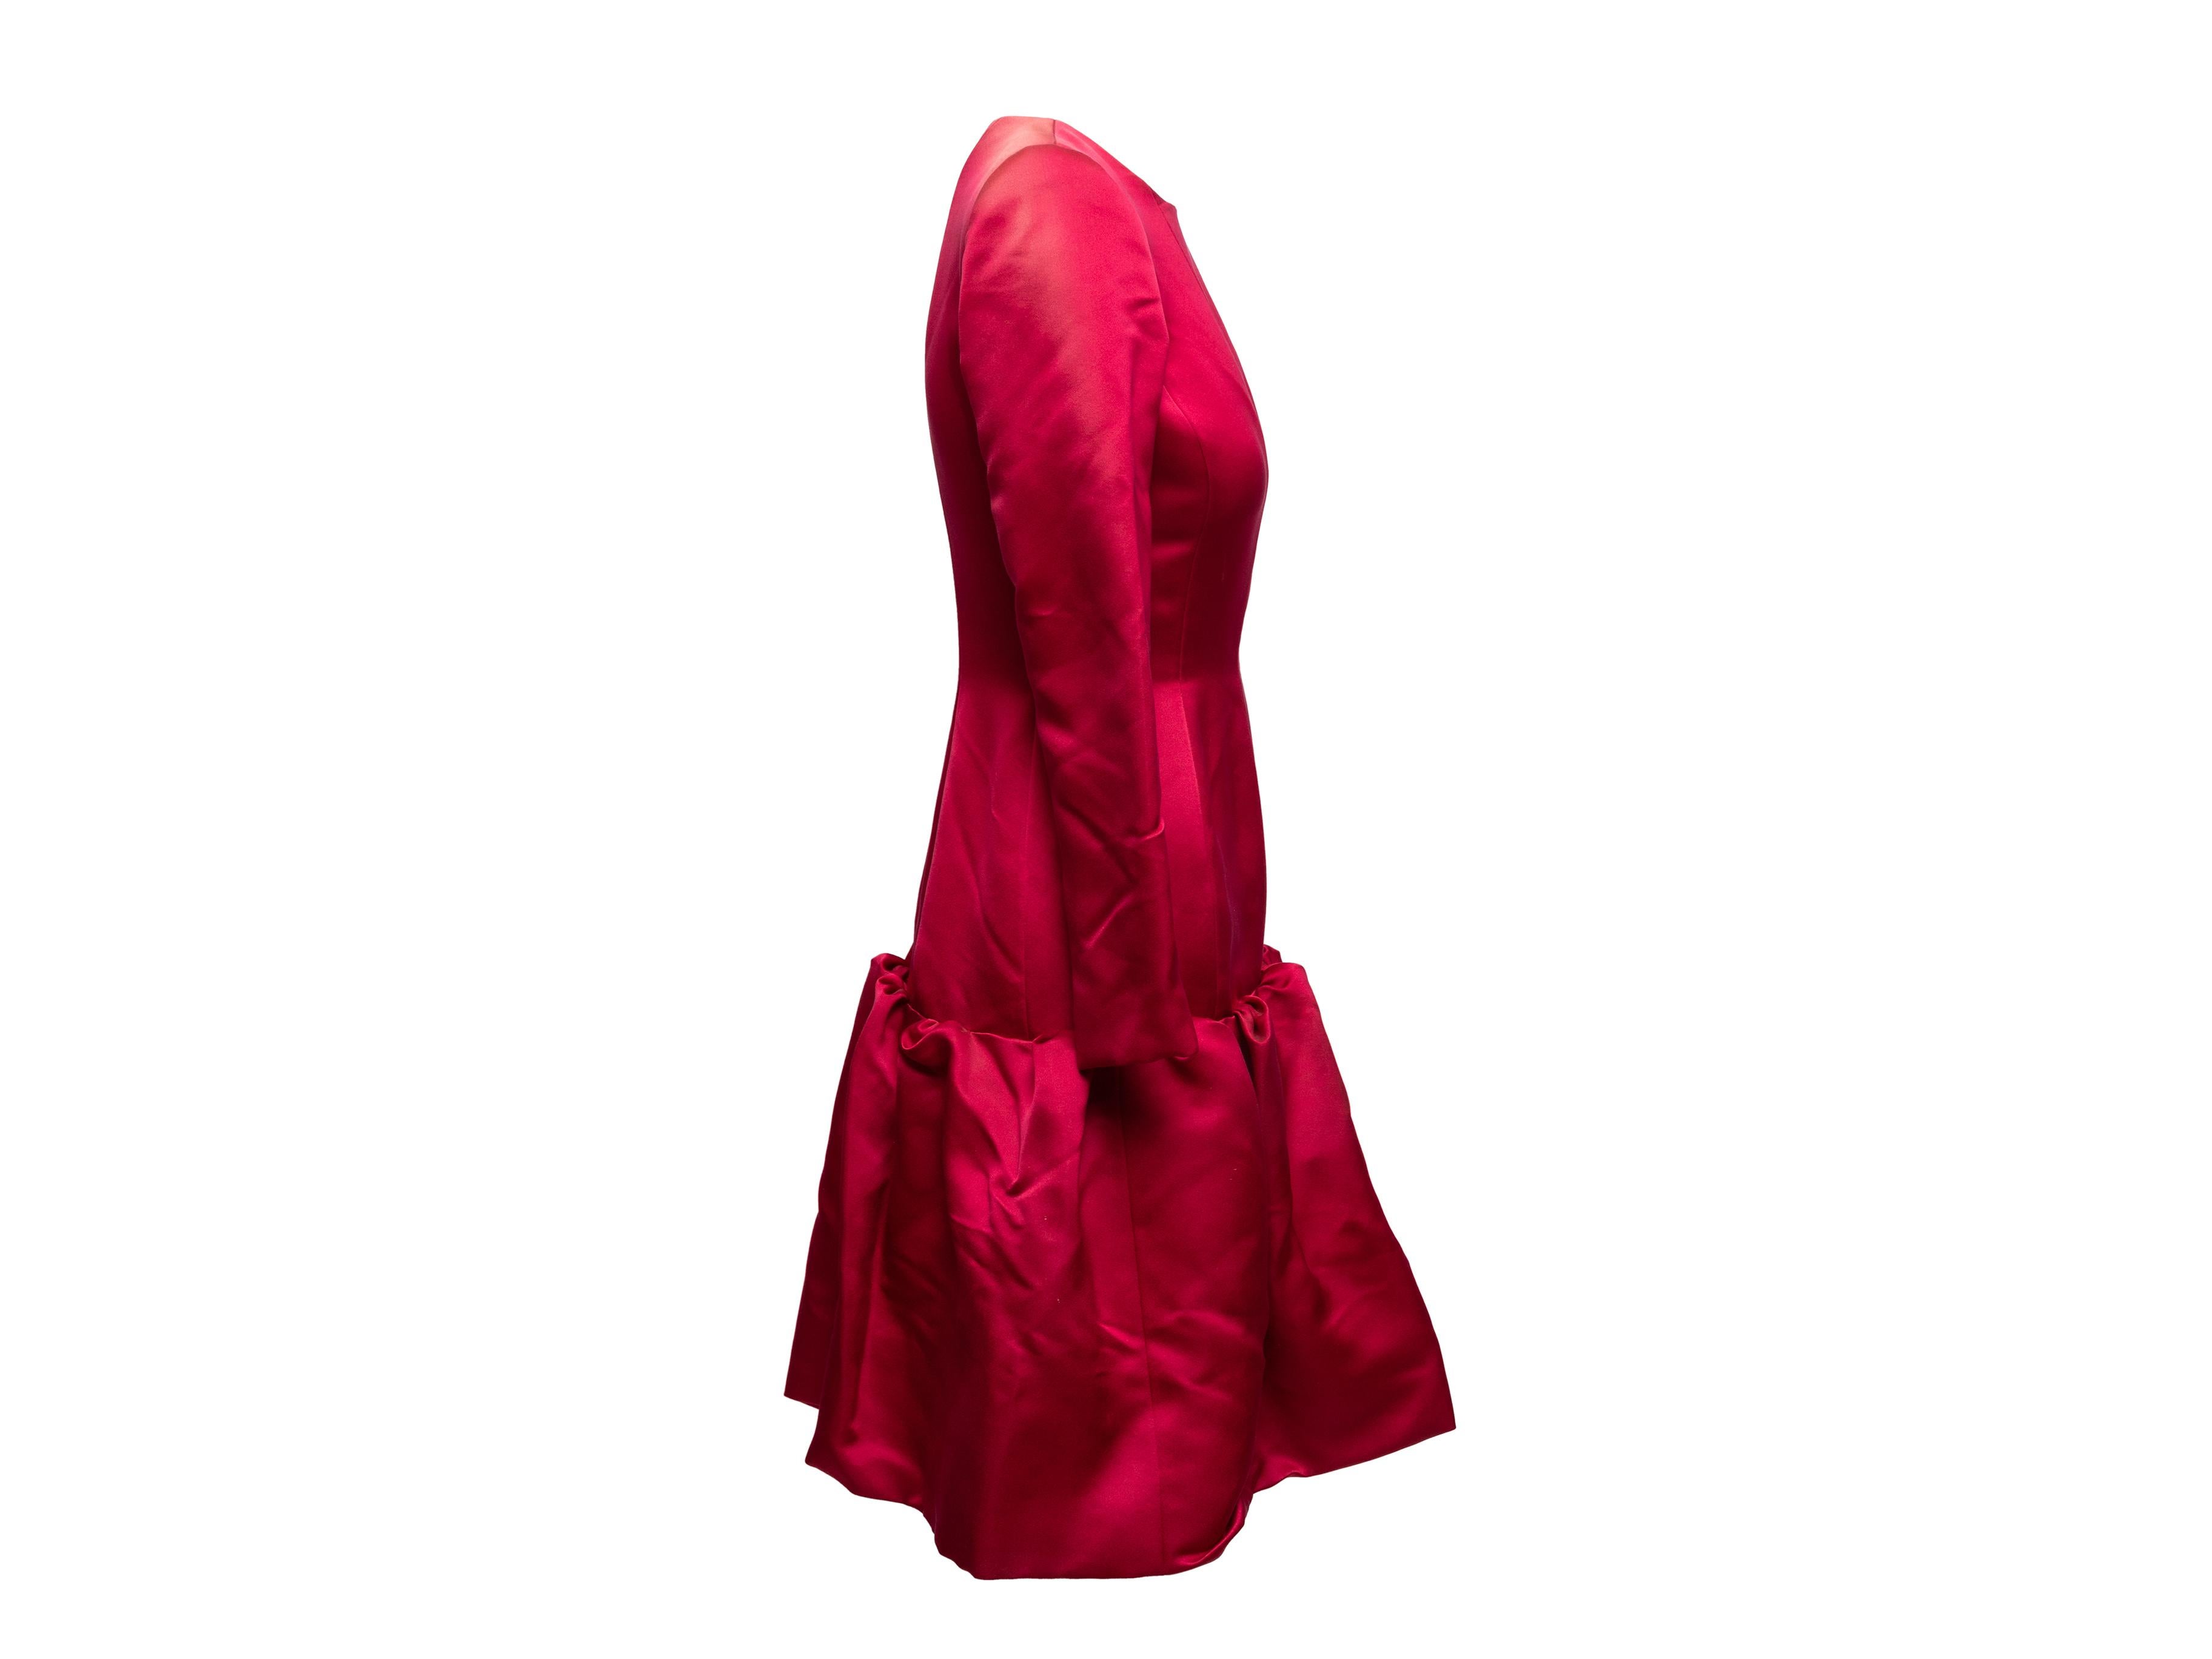 Product Details: Red long sleeve drop waist dress by Oscar de la Renta. Crew neck. Zip closure at back. 34